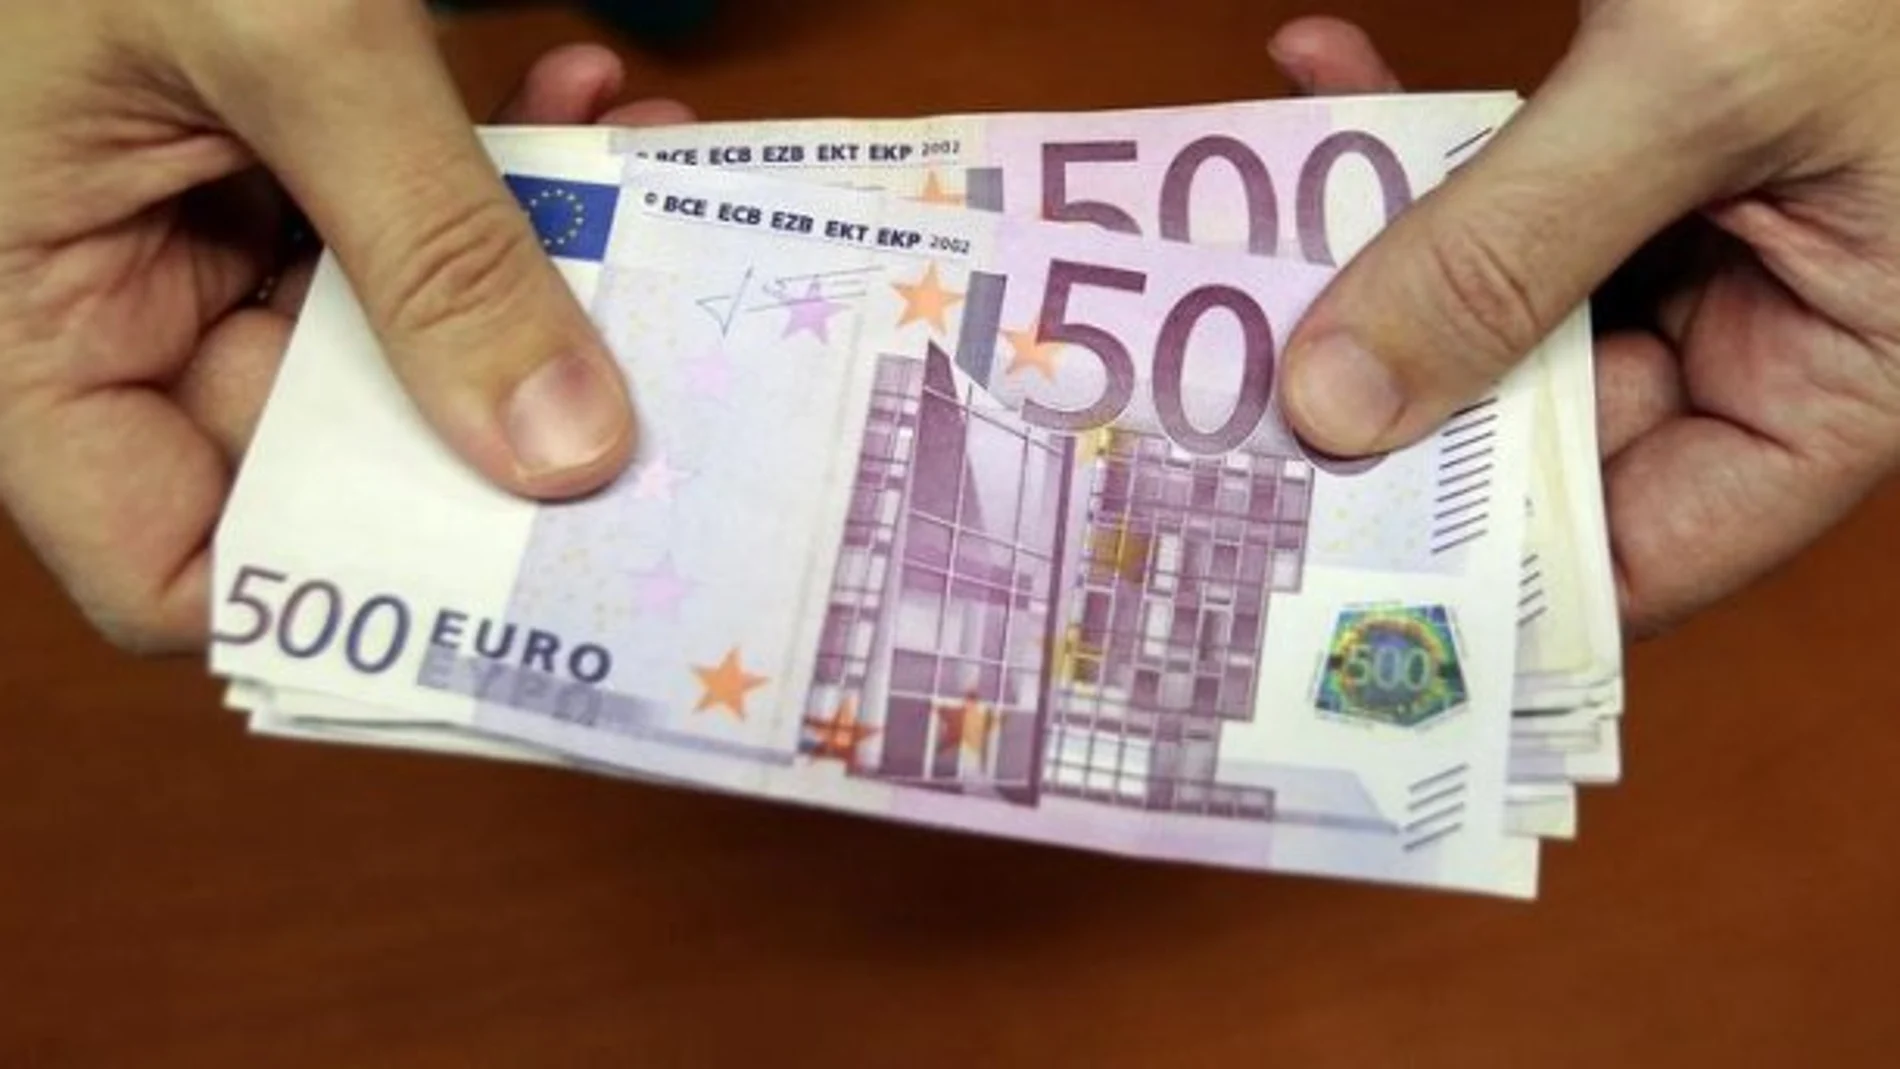 El valor total de los billetes de 500 euros fue de 24.000 millones de euros, frente a los 25.000 millones de euros de diciembre.